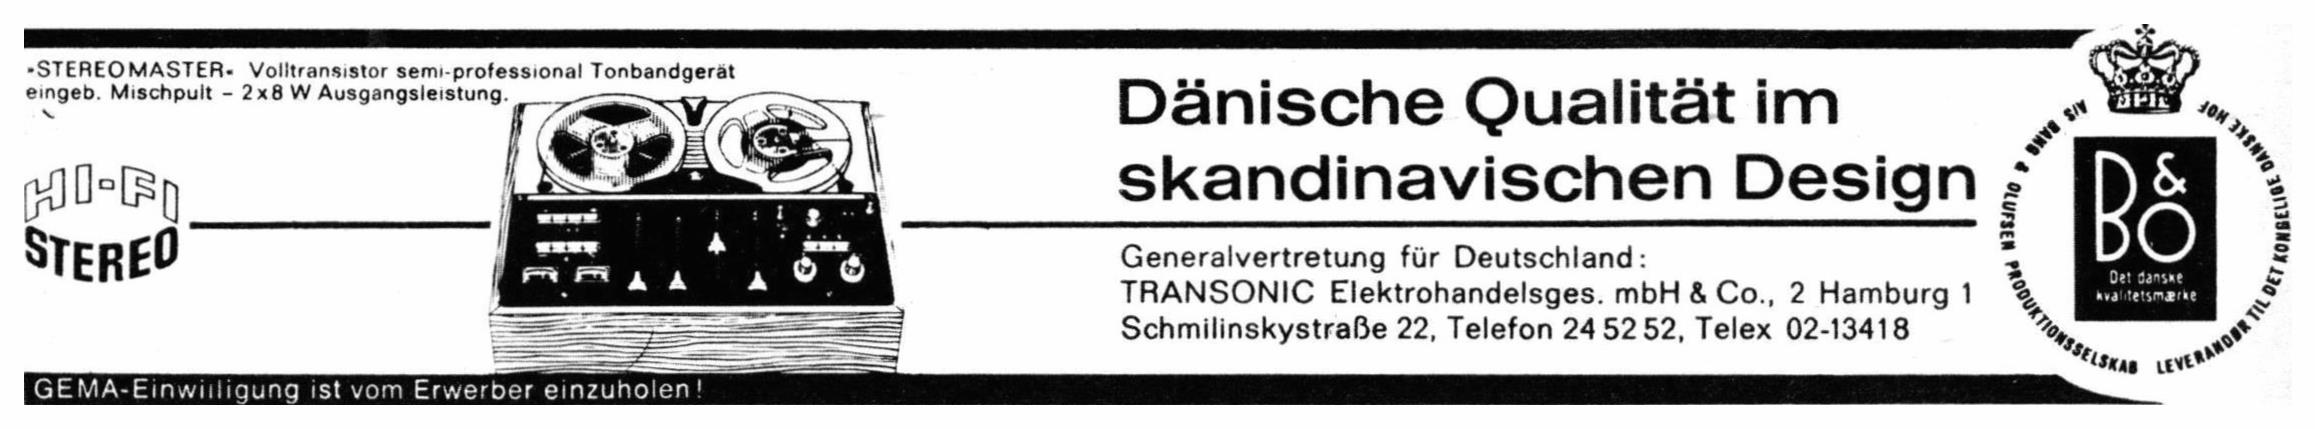 Bang & Olufsen 1964 2.jpg